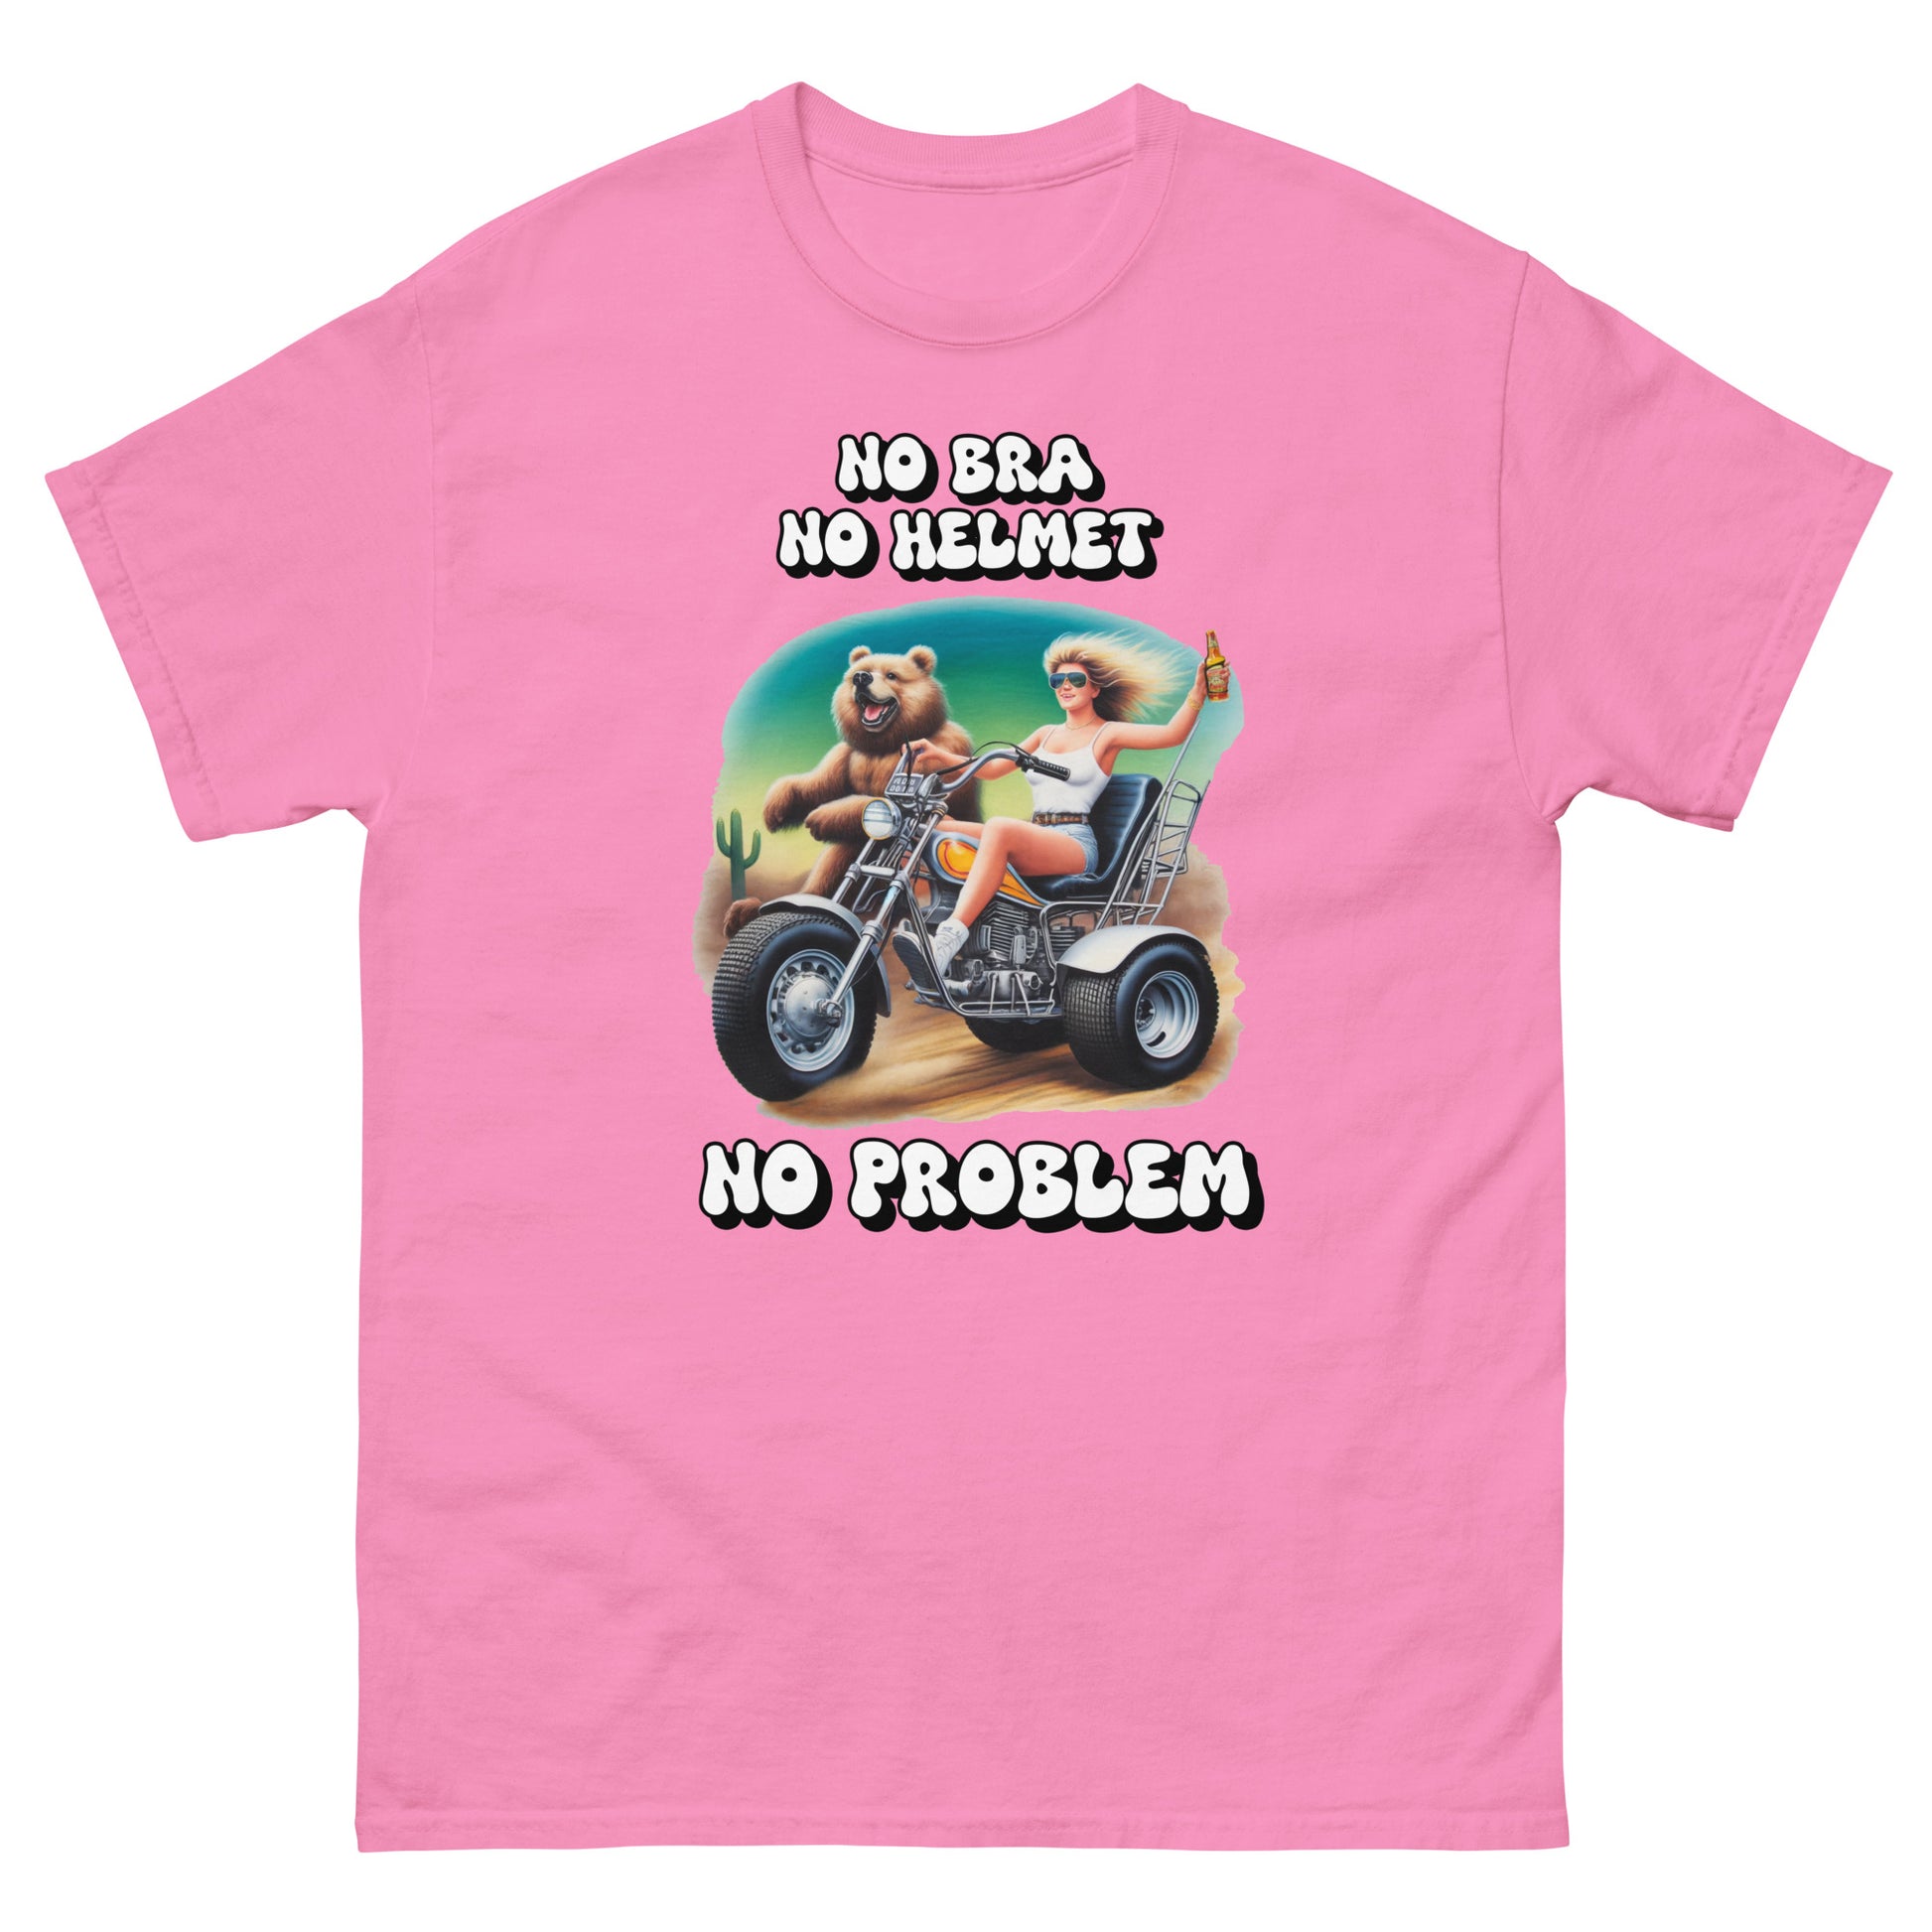 No Bra No Helmet No Problem design printed on  t-shirt by Whistler Shirts